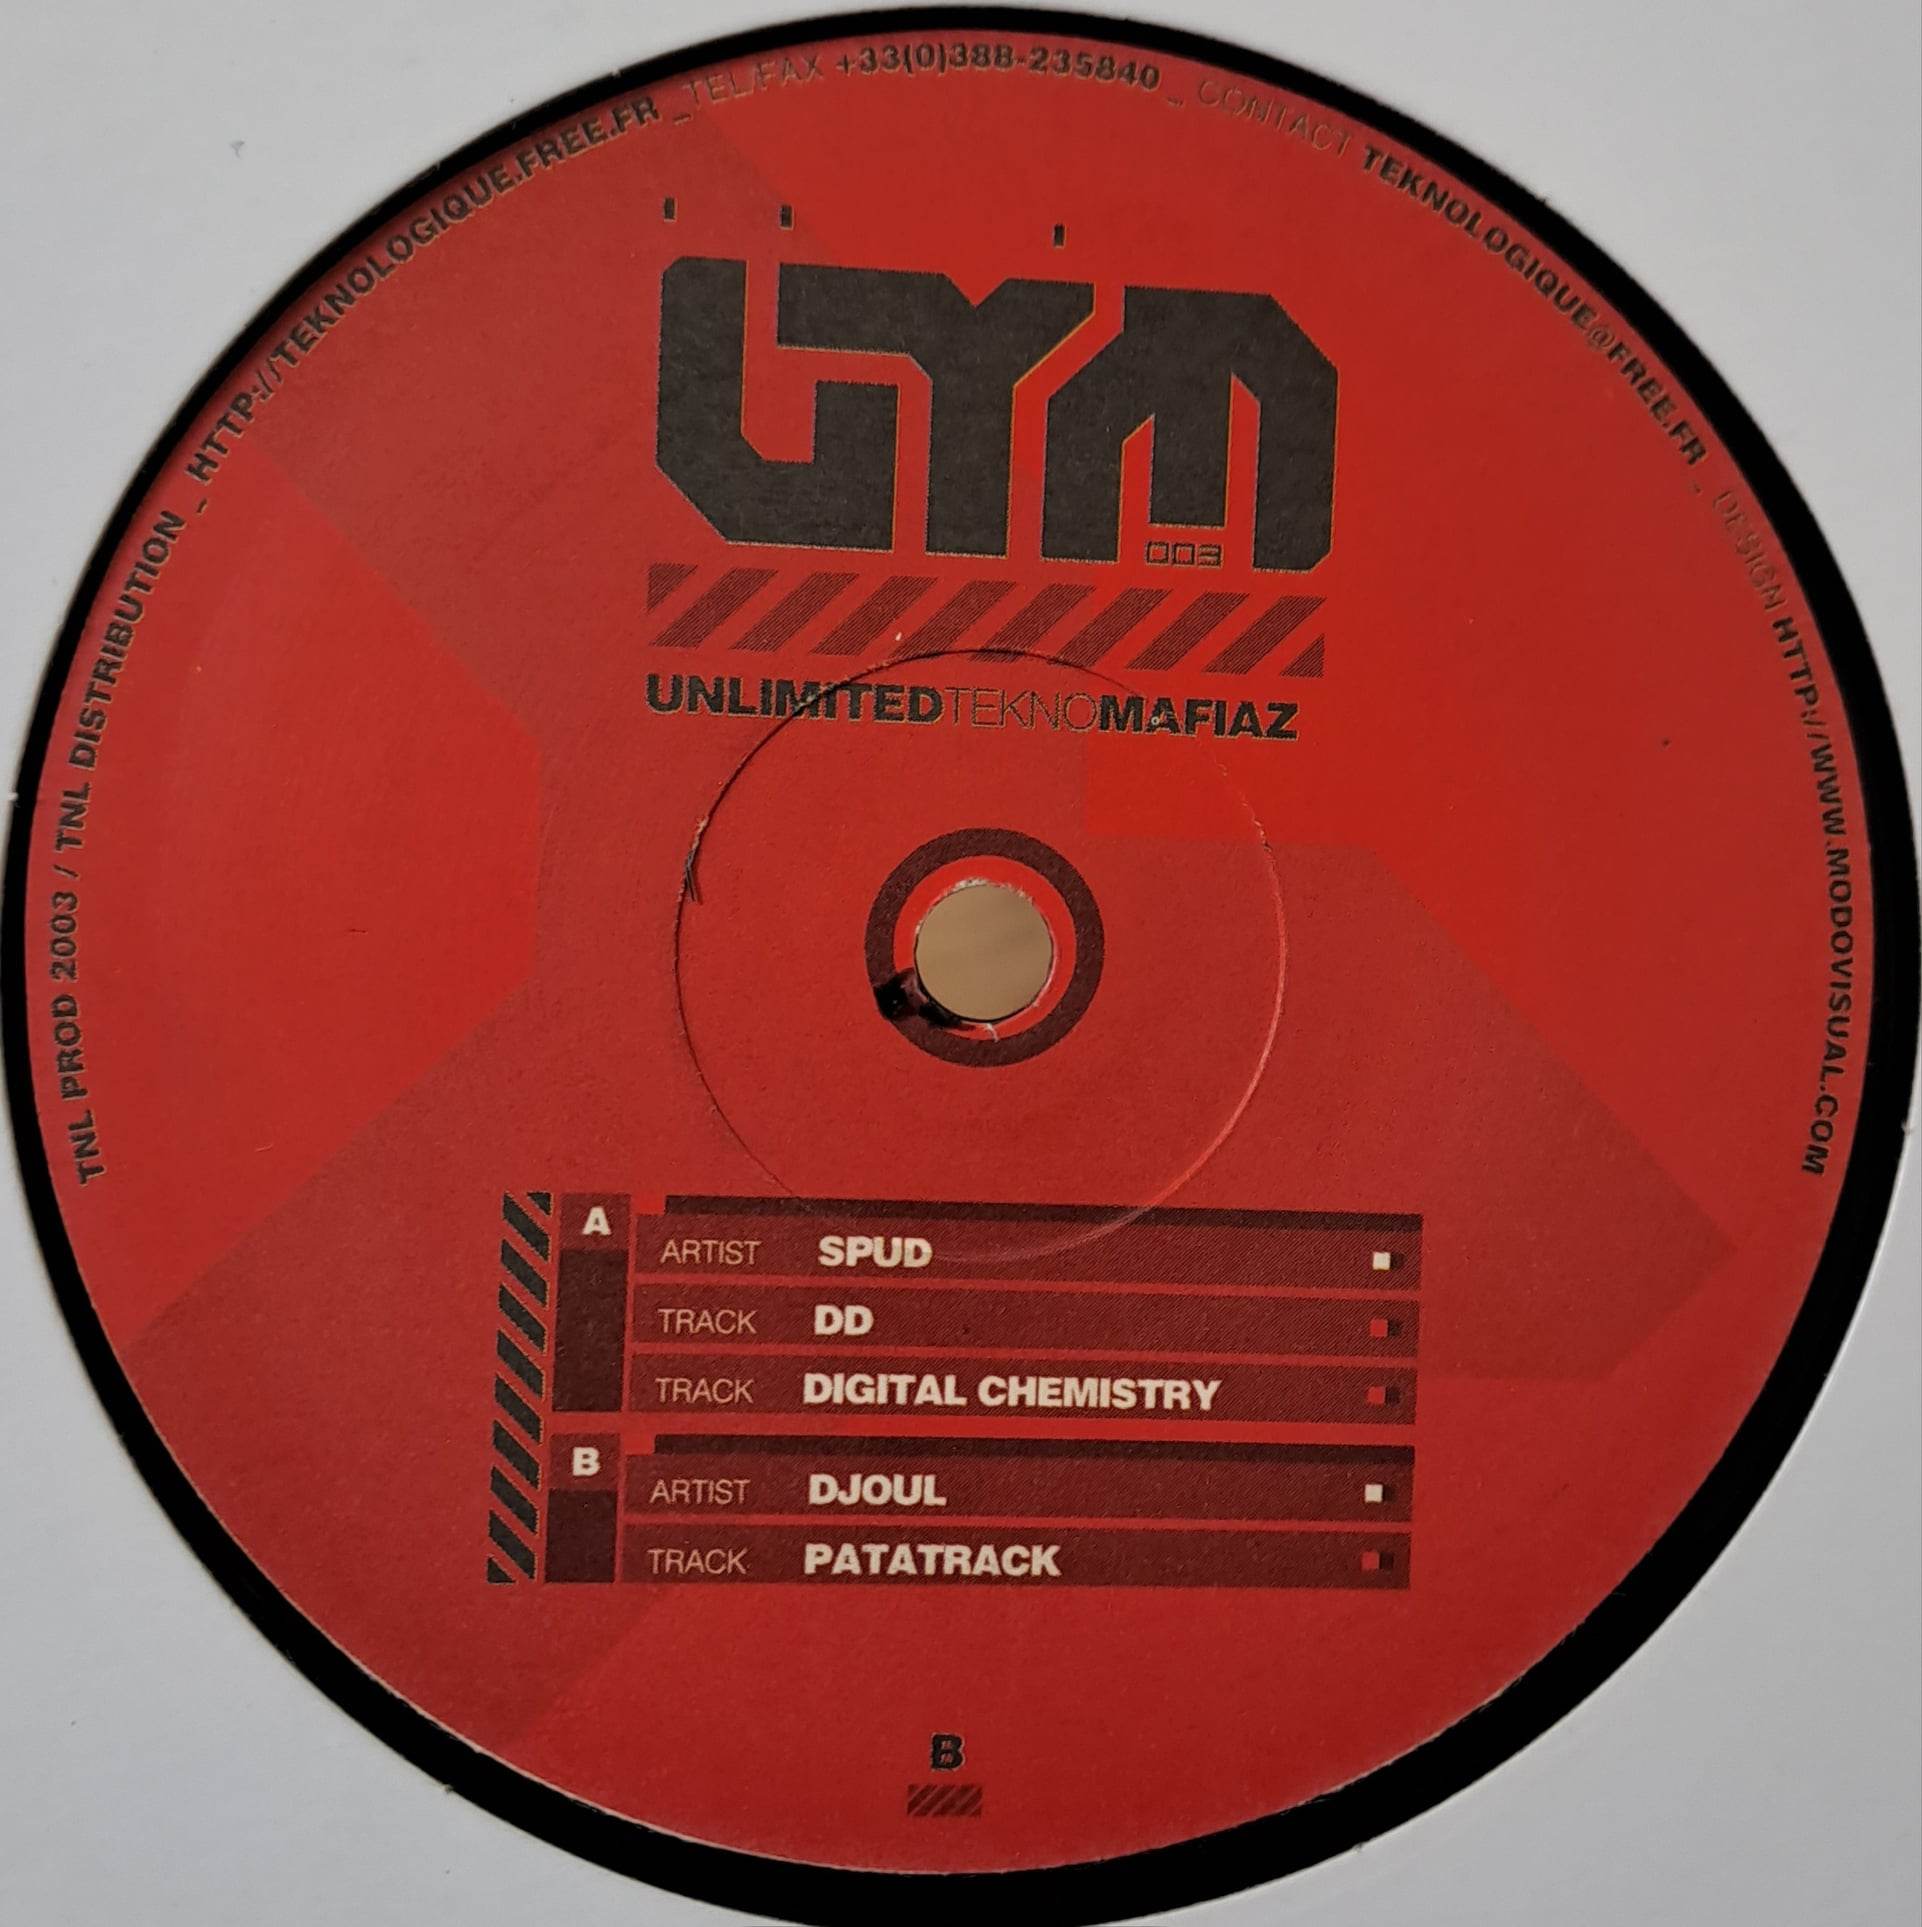 Unlimited Tekno Mafiaz 003 - vinyle freetekno